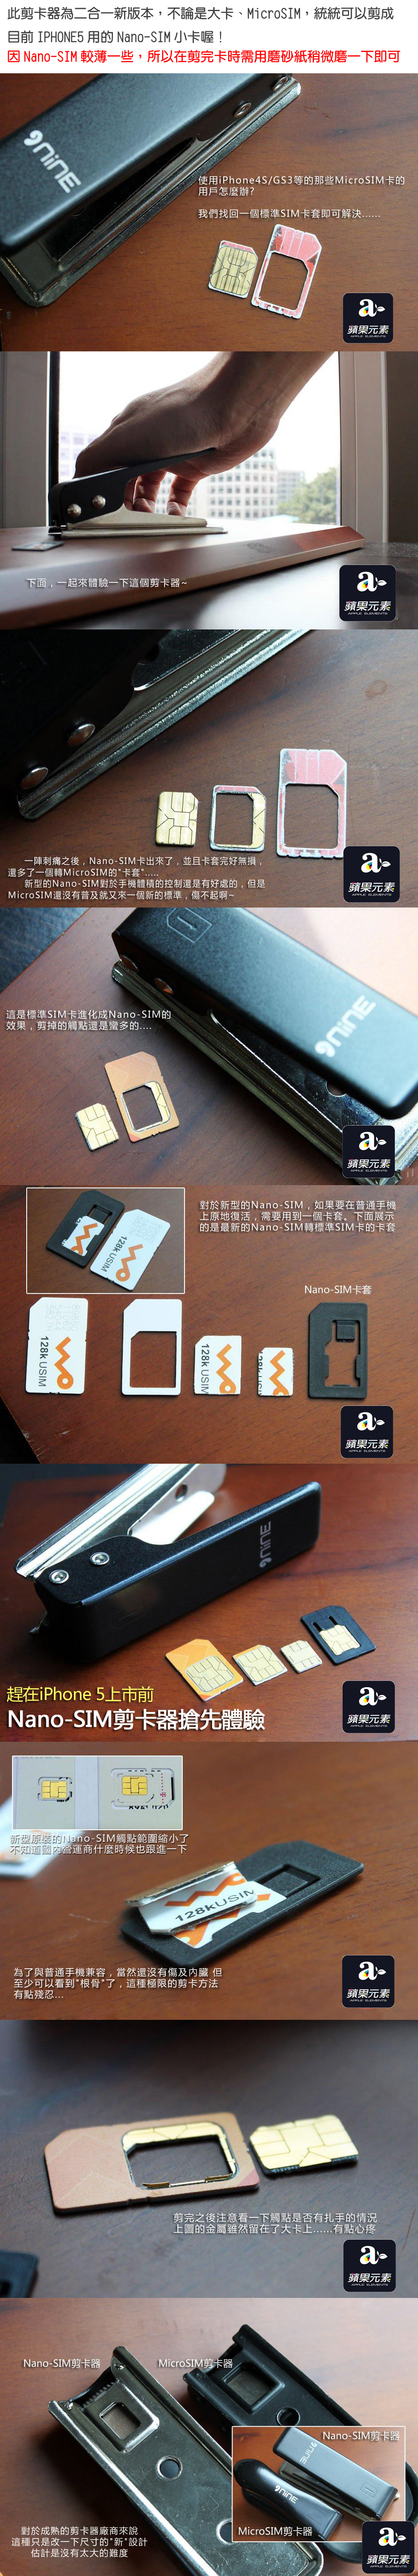  IPHONE 5 nano-SIM卡 剪卡器 micro-SIM 通信業者必備